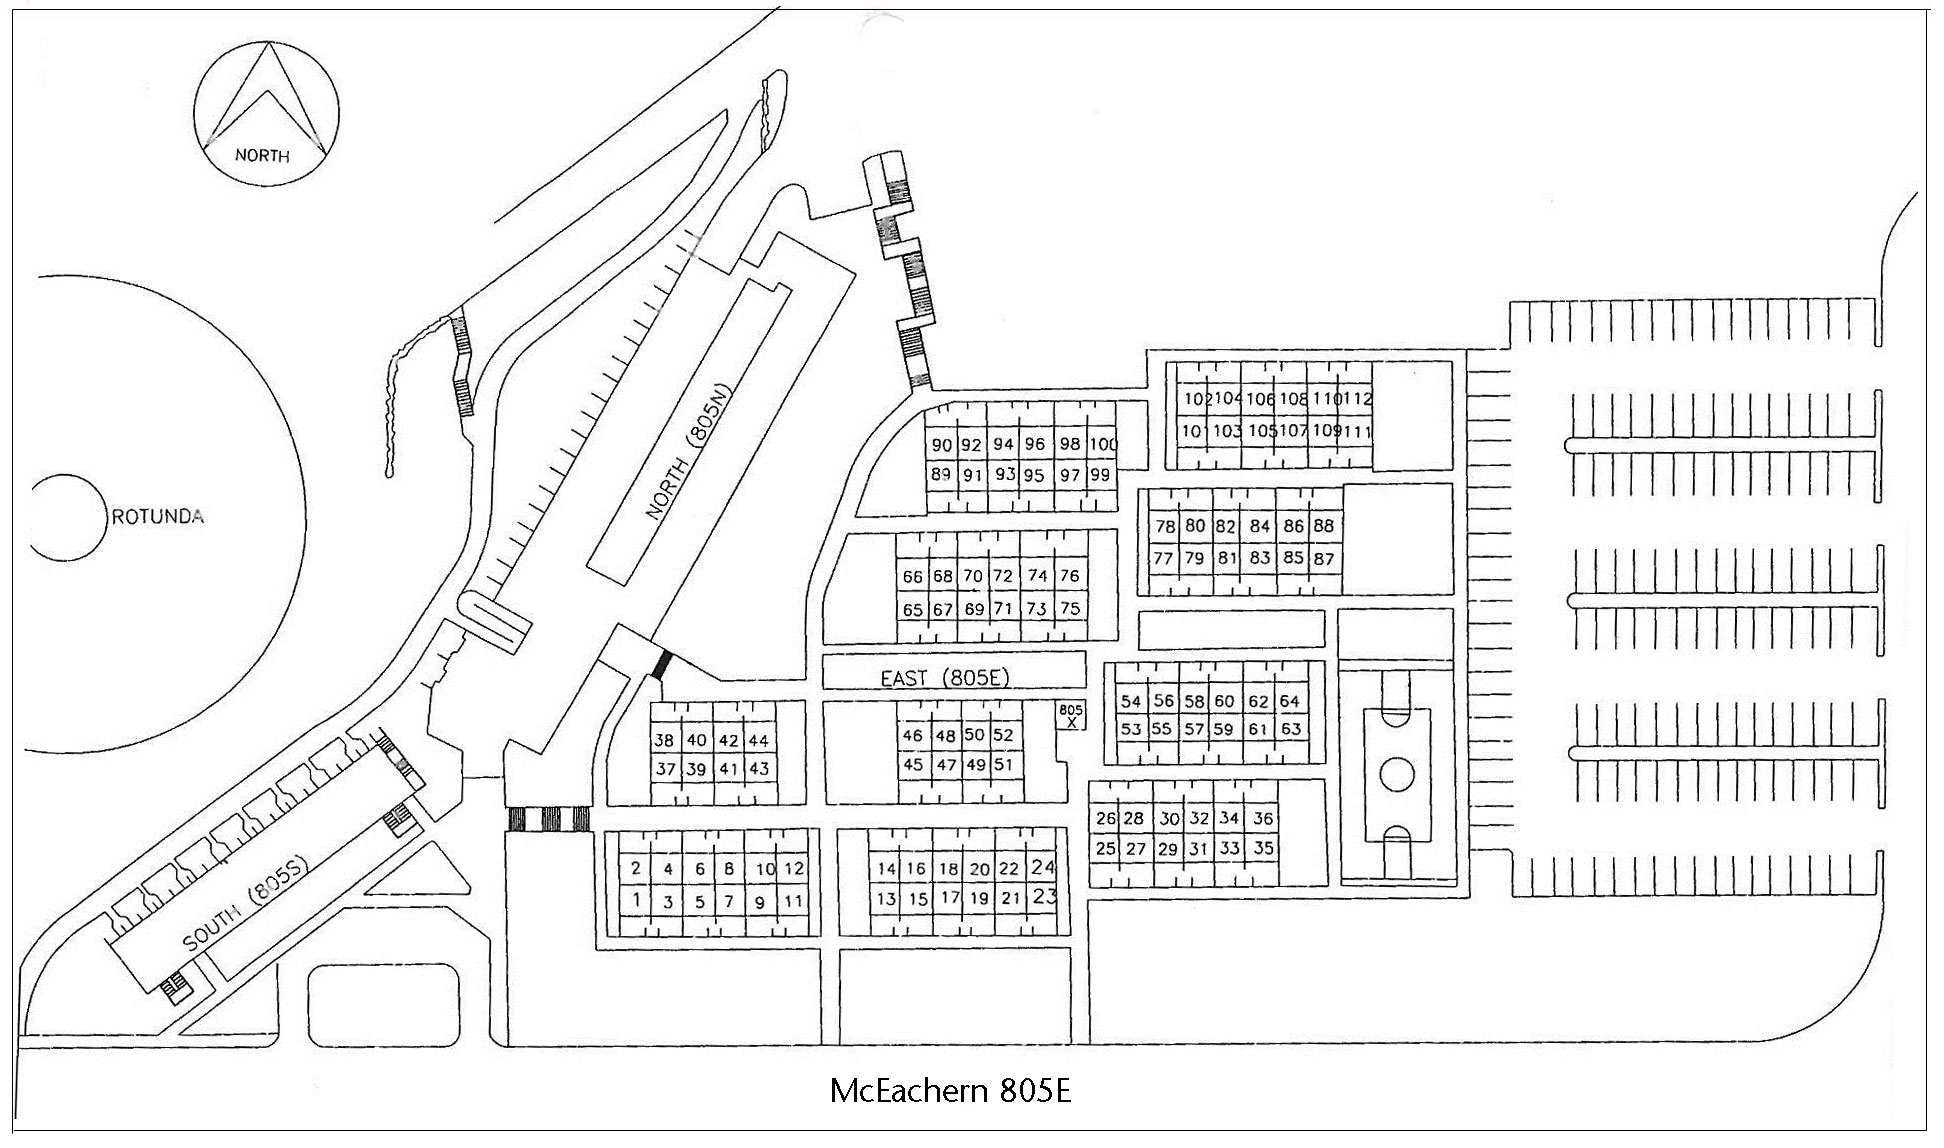 McEachern east layout